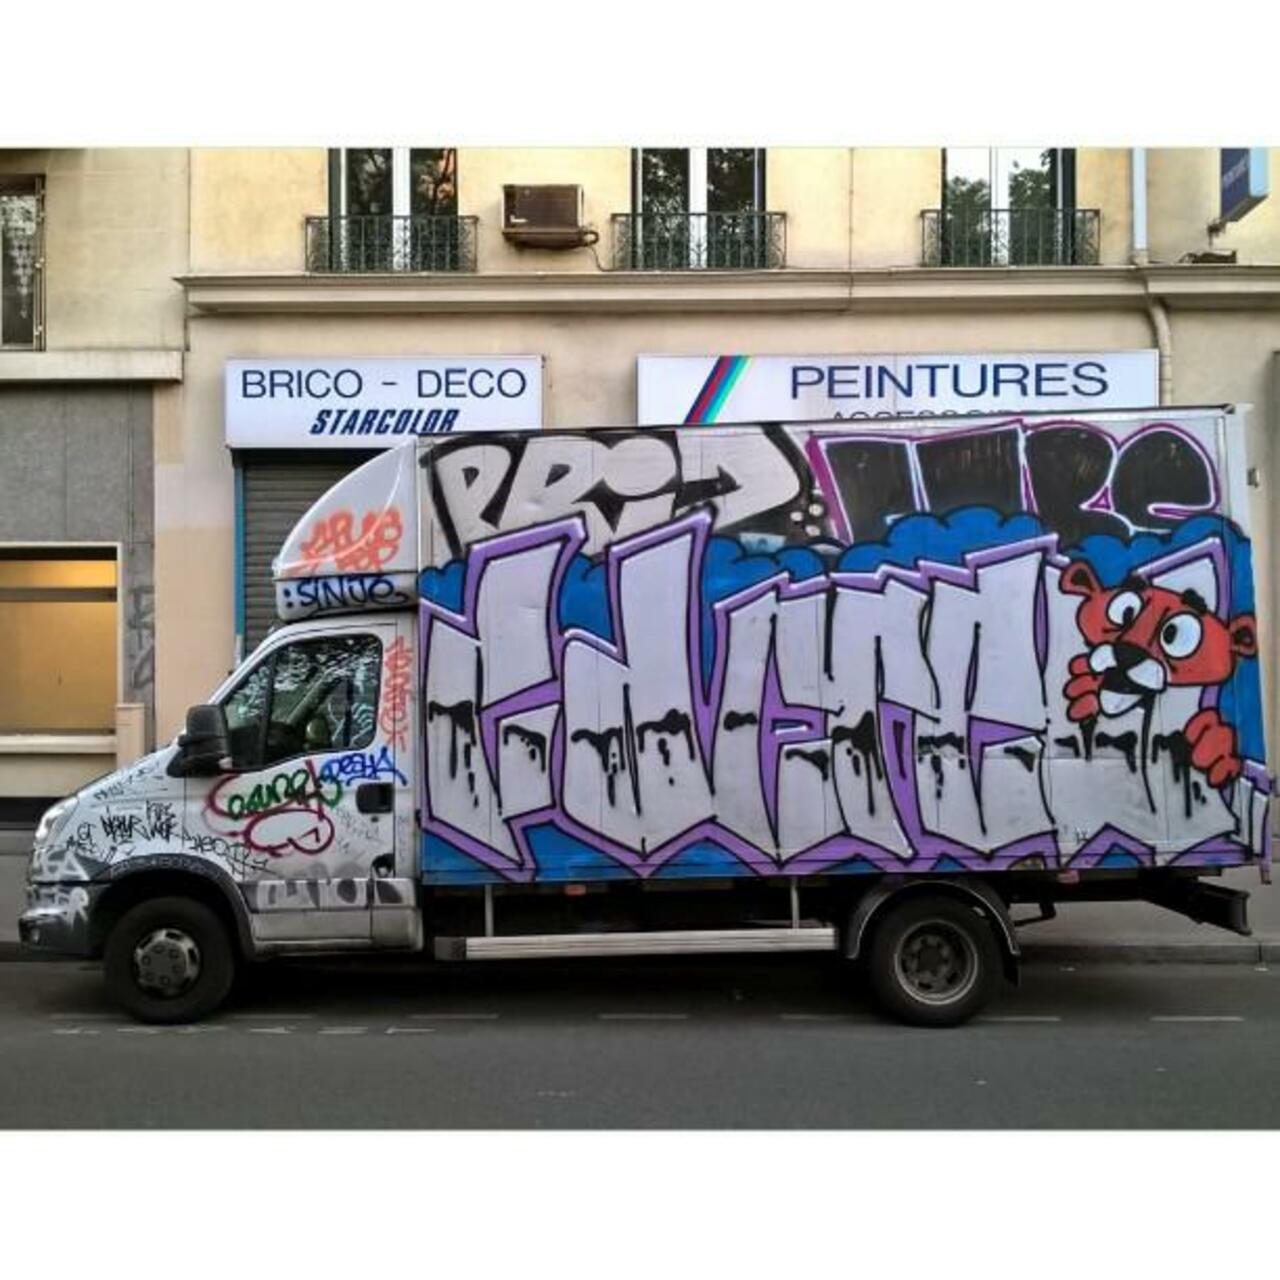 circumjacent_fr: #Paris #graffiti photo by maxdimontemarciano http://ift.tt/1JXKHLq #StreetArt http://t.co/UFLoWIbHNs